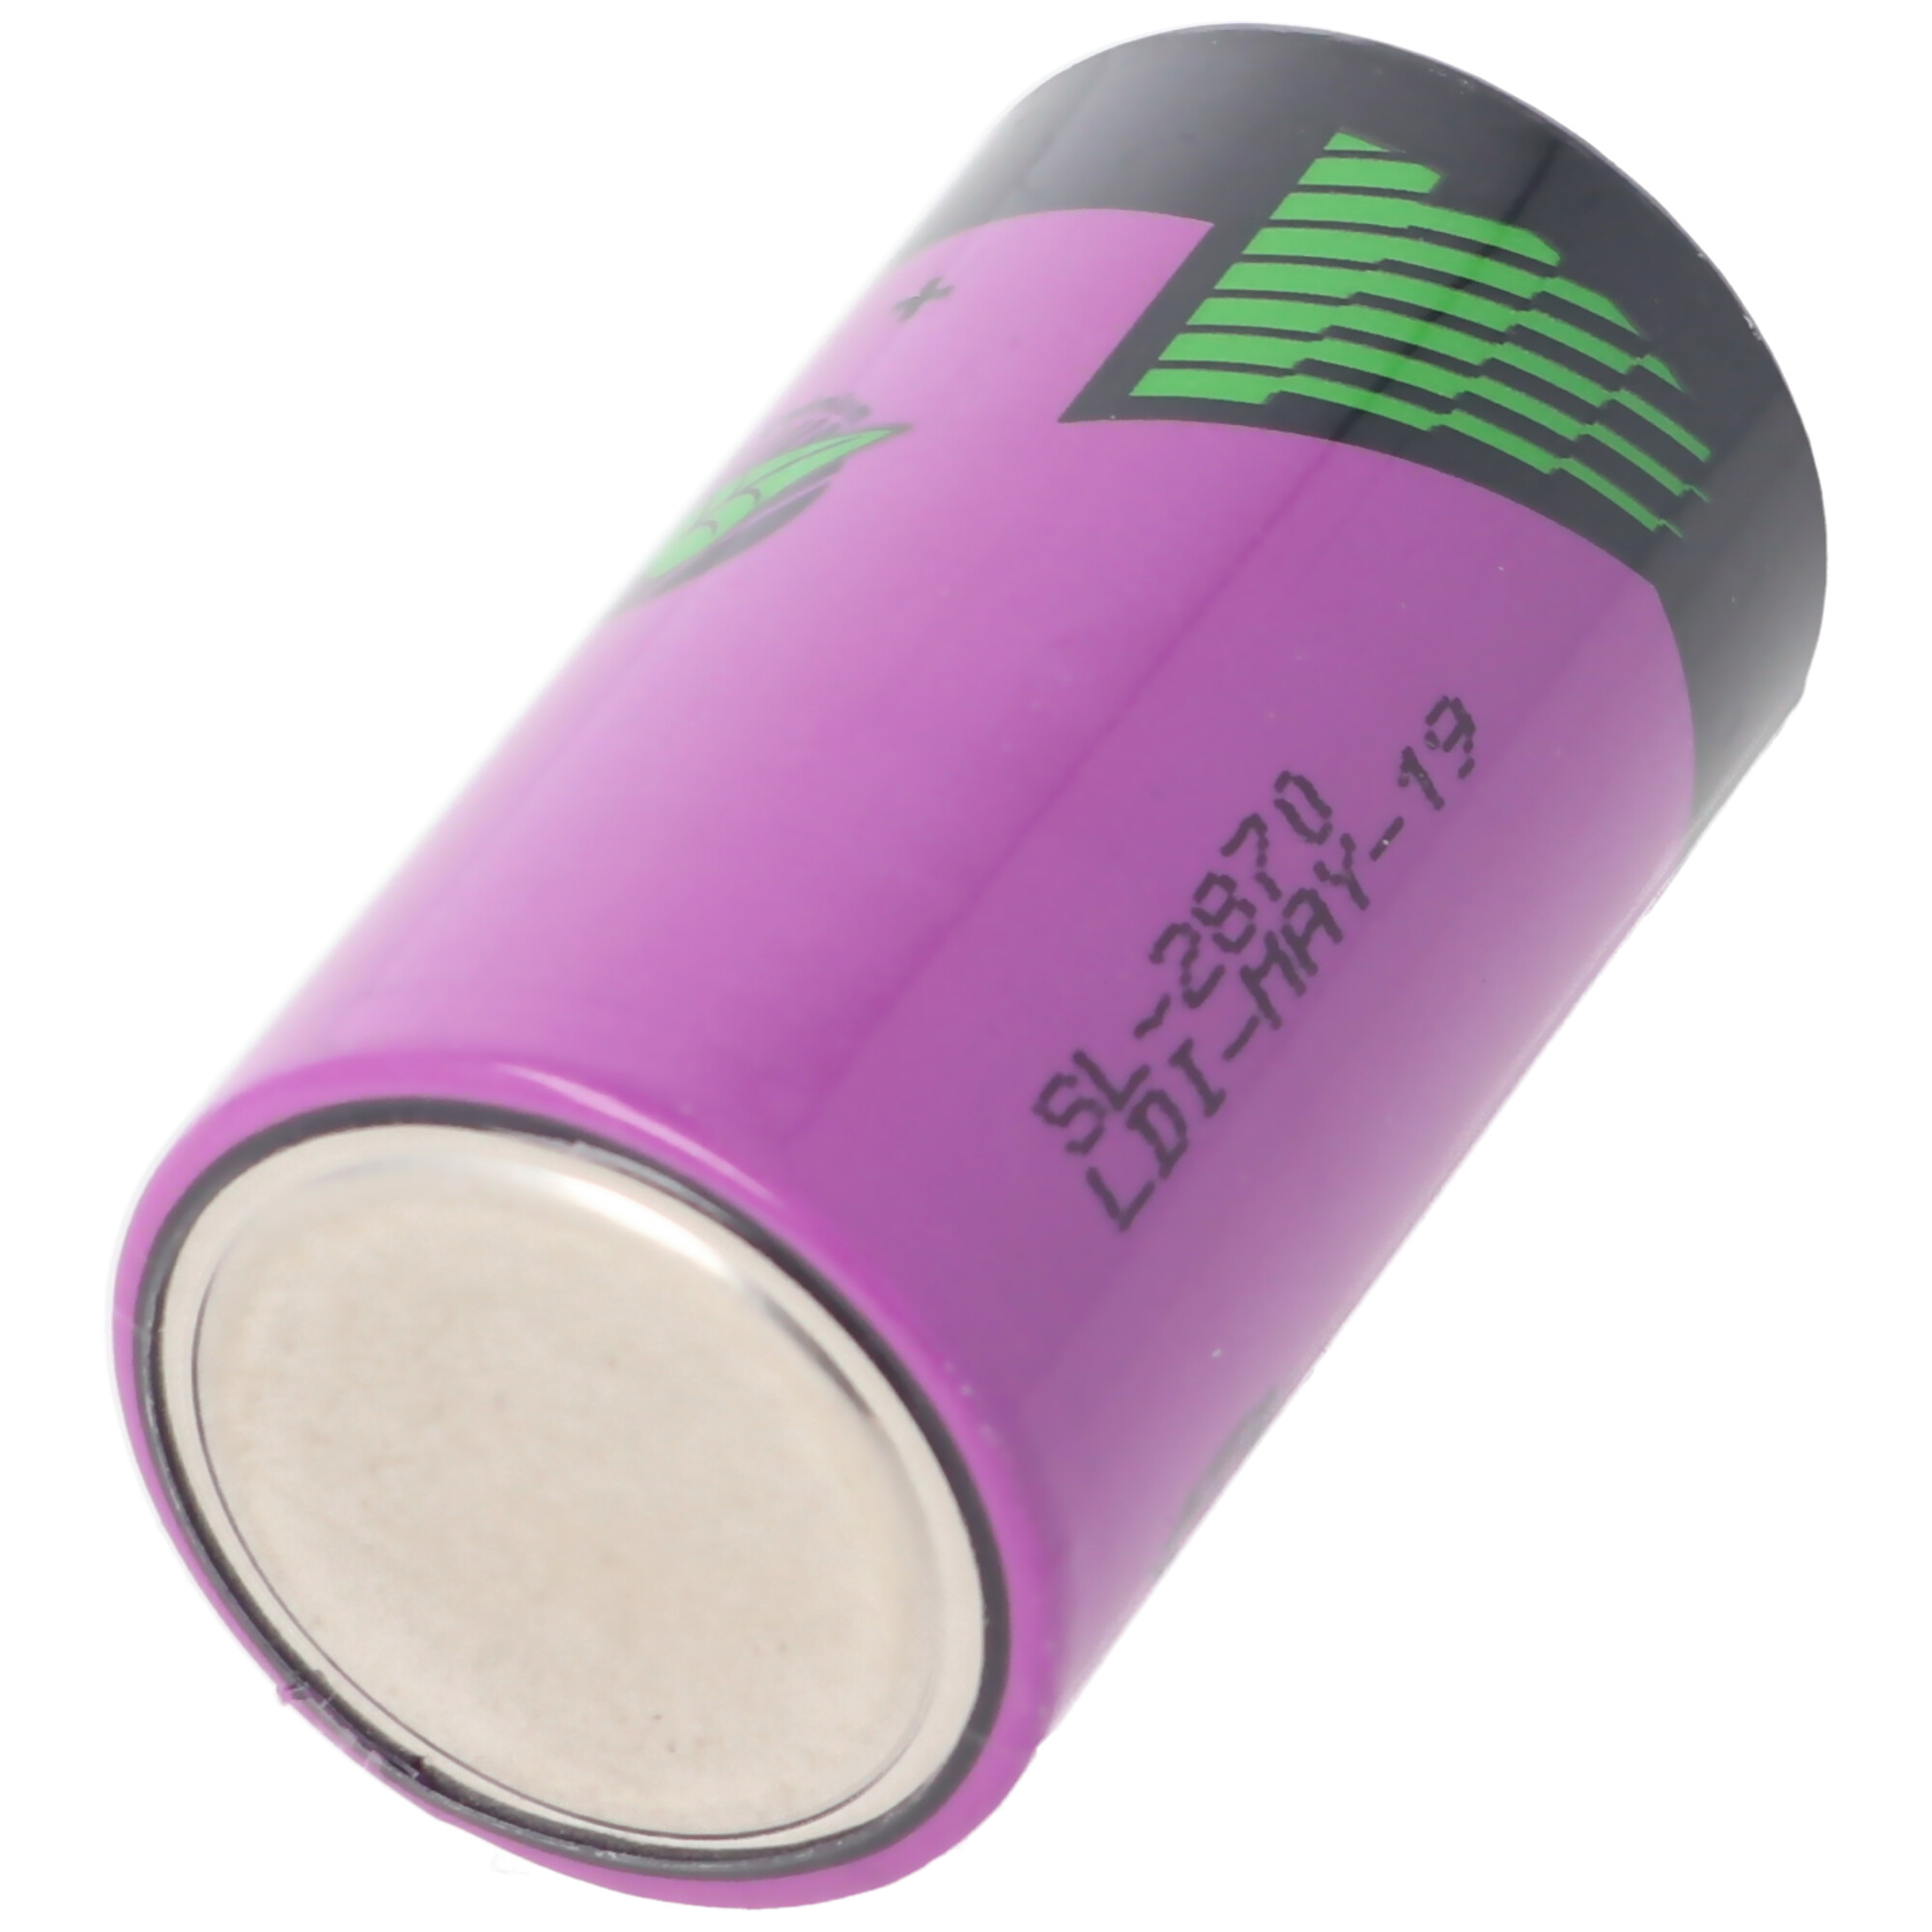 Tadiran LTC SL-2870/S Lithium-Thionylchlorid Batterie